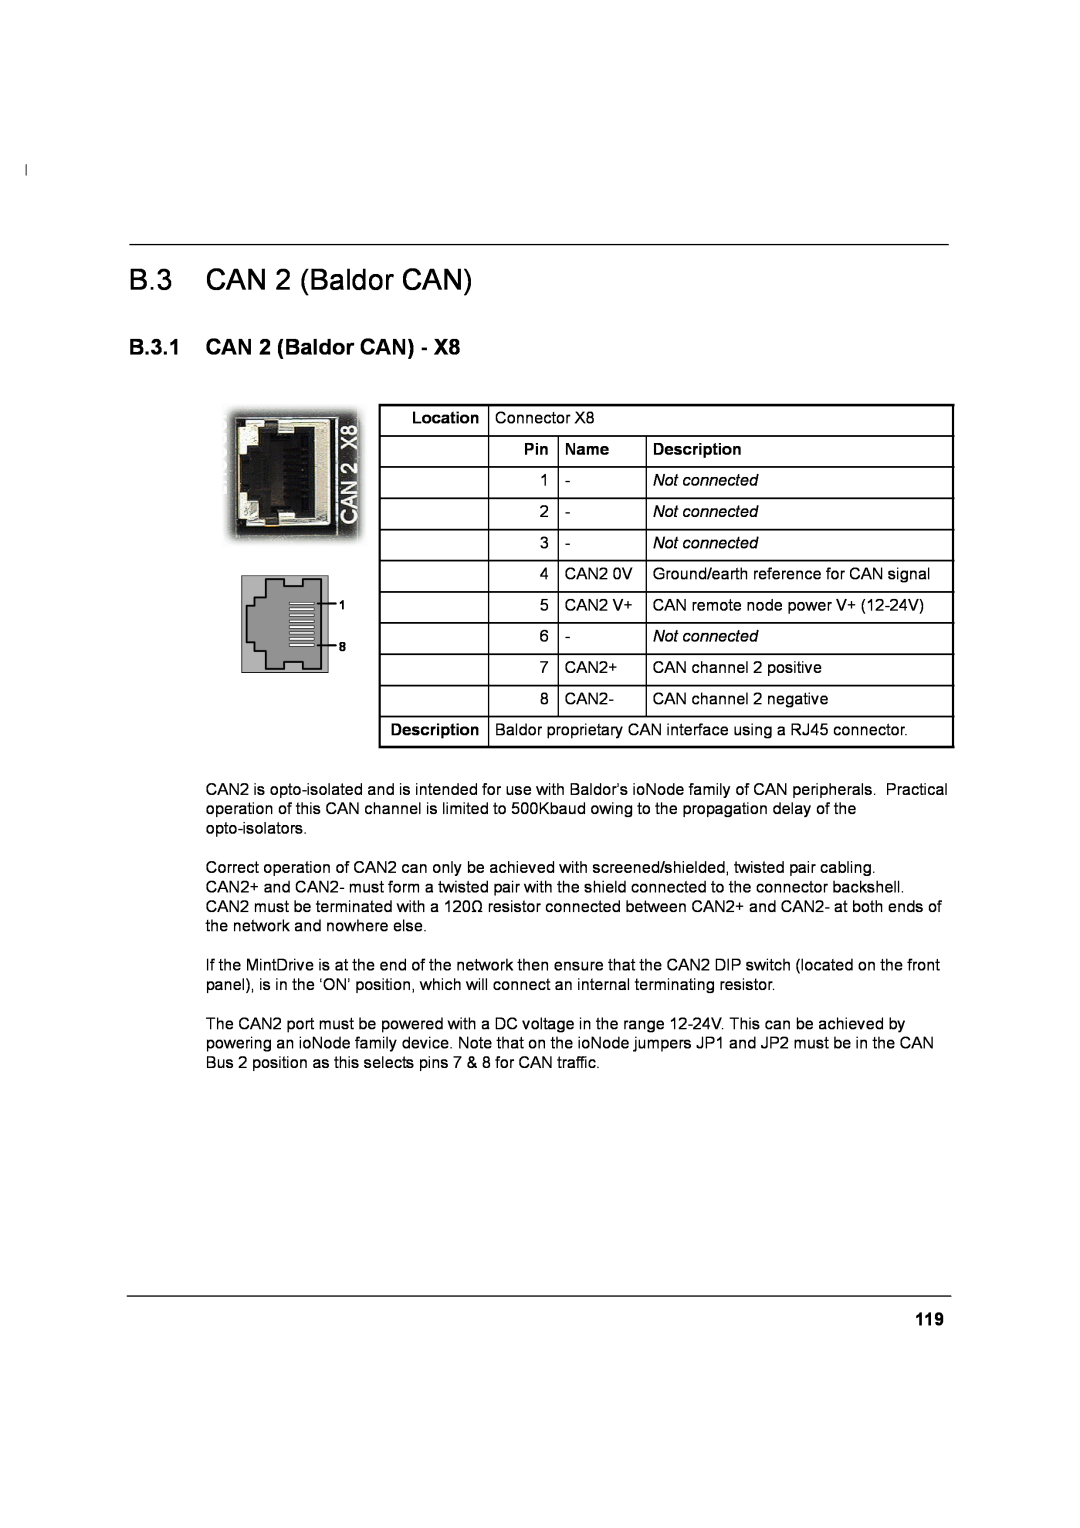 Baldor MN1274 06/2001 installation manual B.3 CAN 2 Baldor CAN, B.3.1 CAN 2 Baldor CAN 